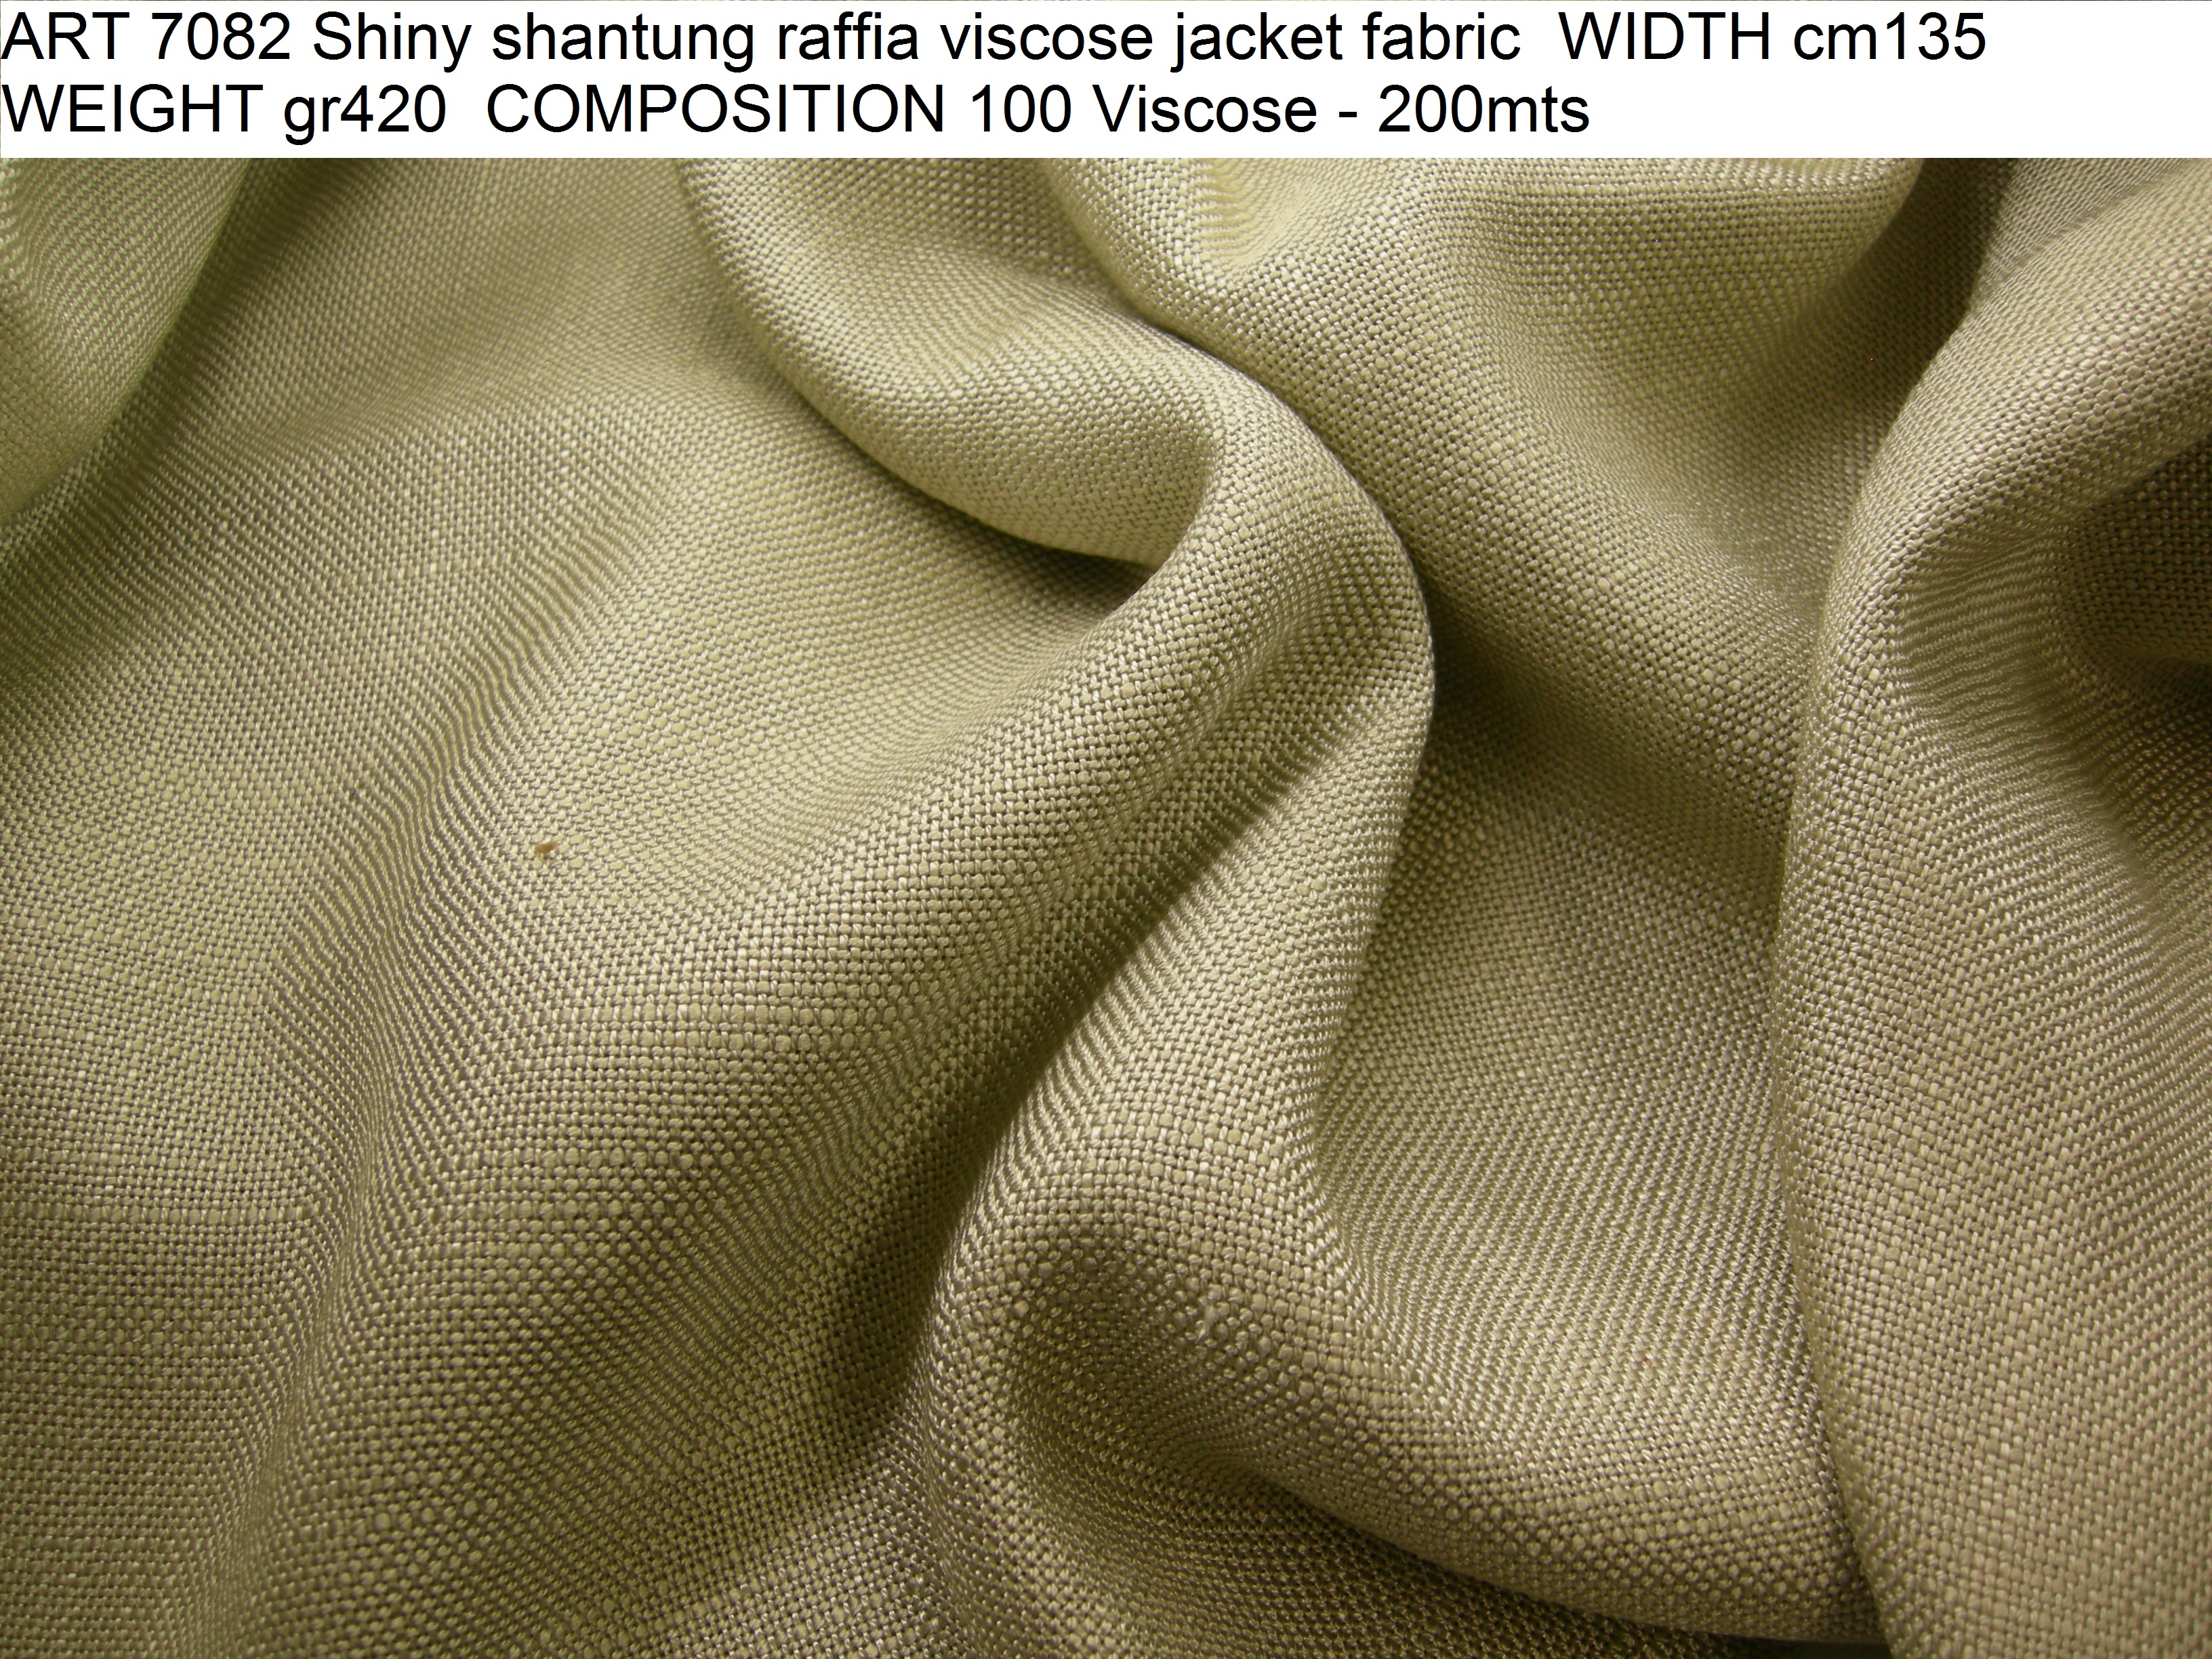 ART 7082 Shiny shantung raffia viscose jacket fabric WIDTH cm135 WEIGHT gr420 COMPOSITION 100 Viscose - 200mts